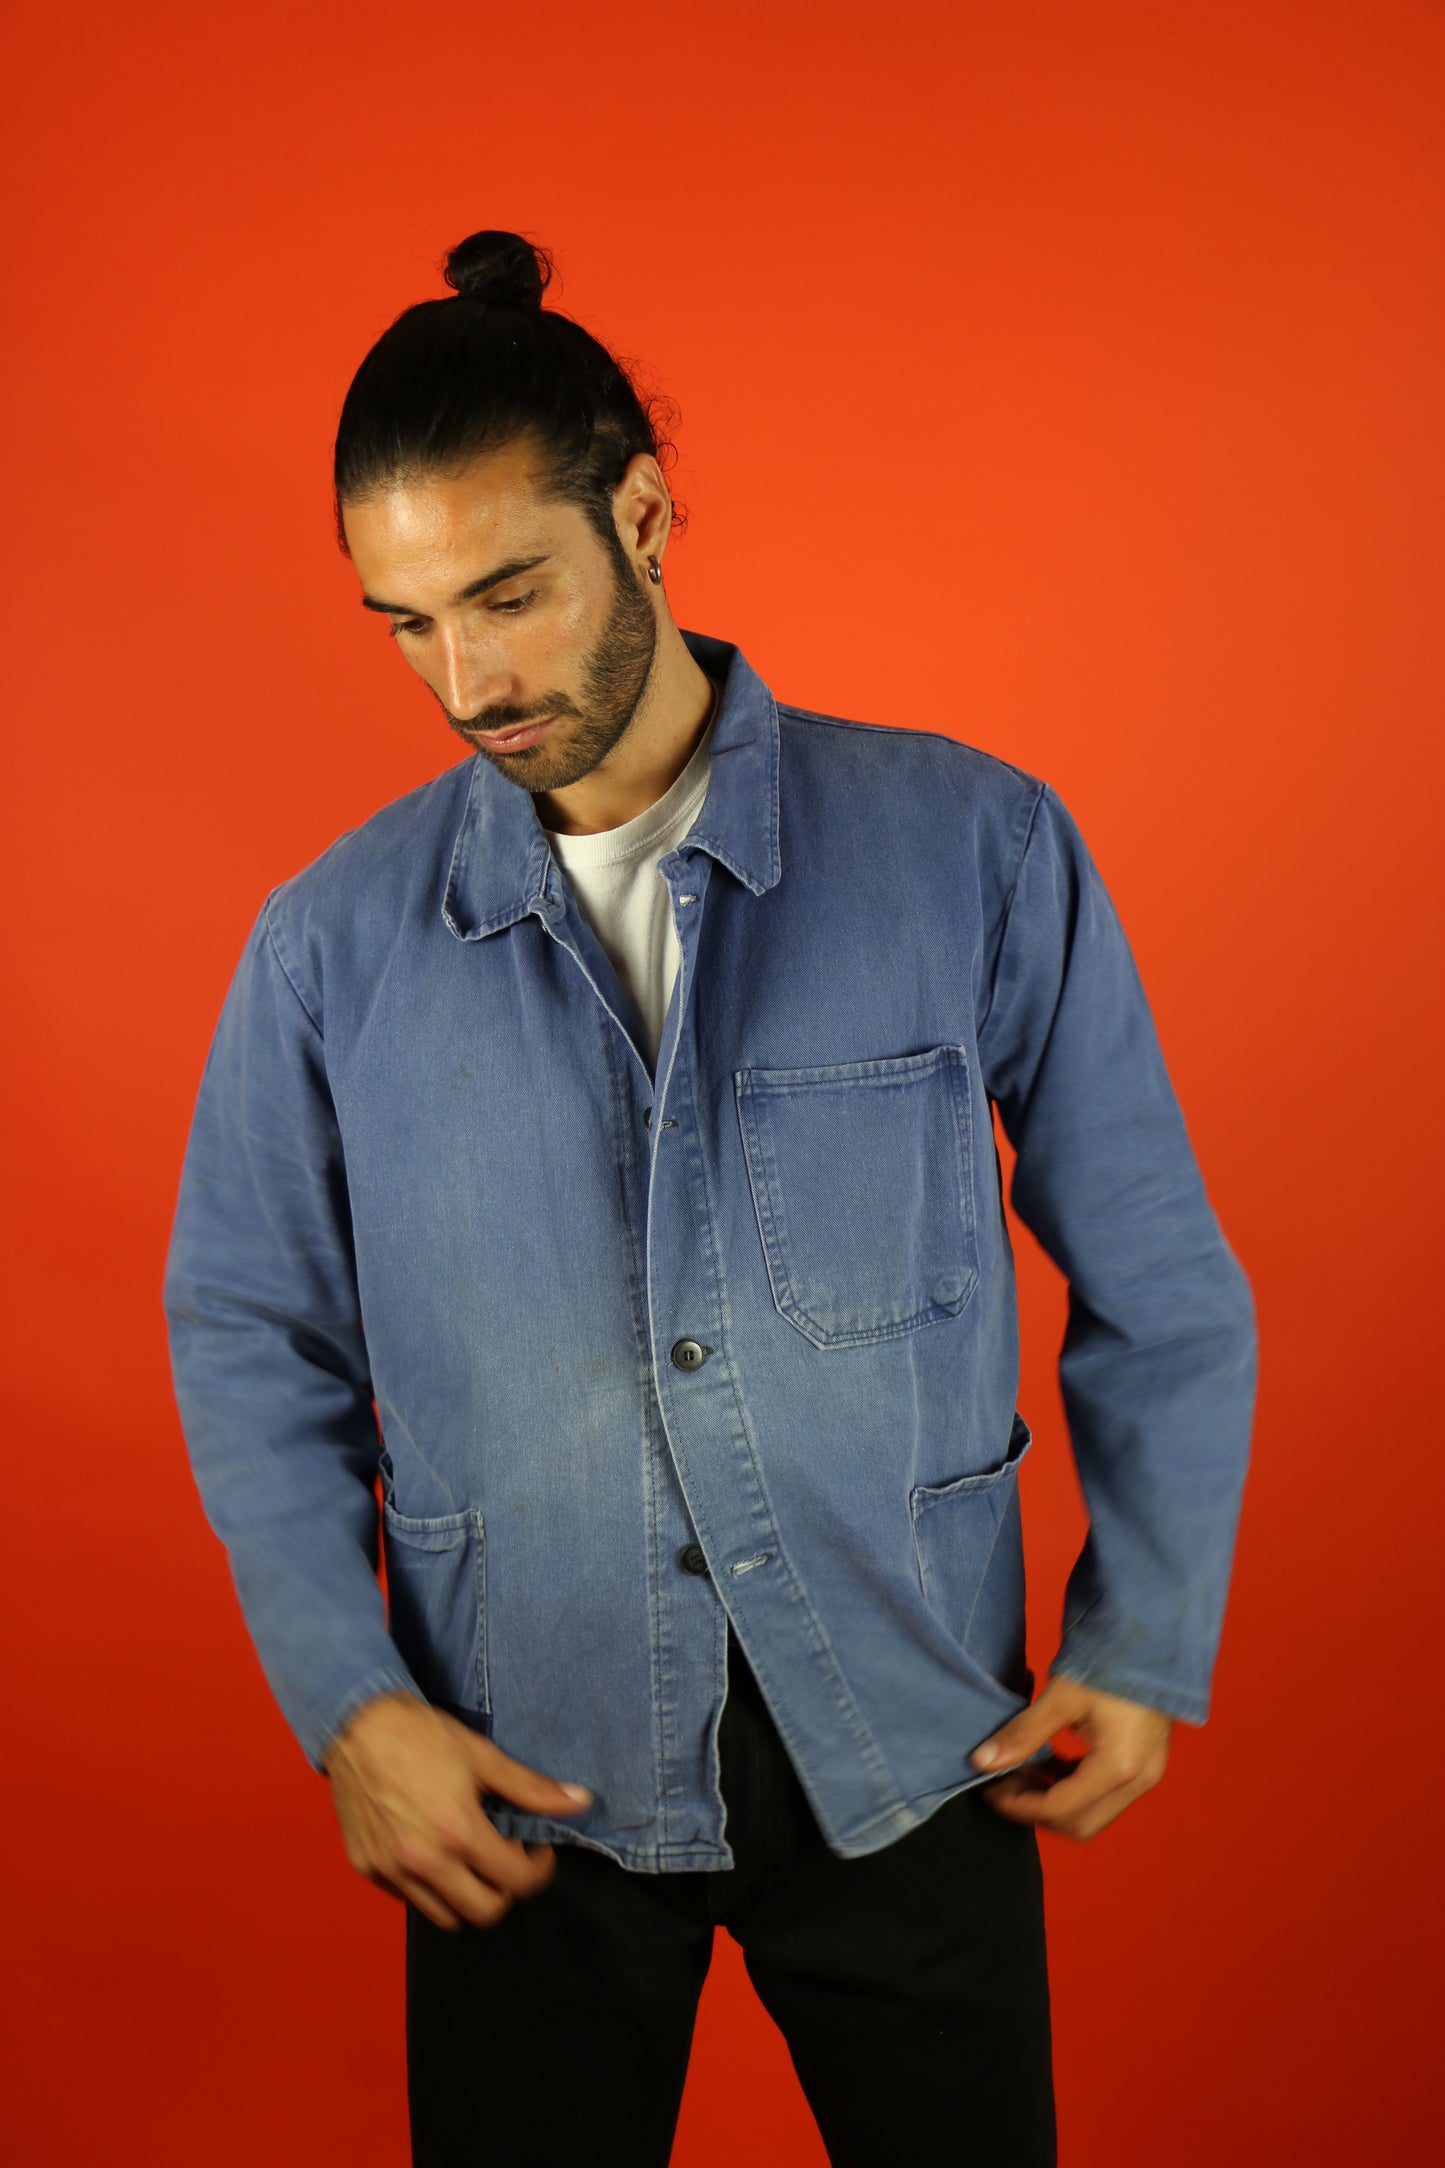 Work Jacket Patche on the pocket - vintage clothing clochard92.com